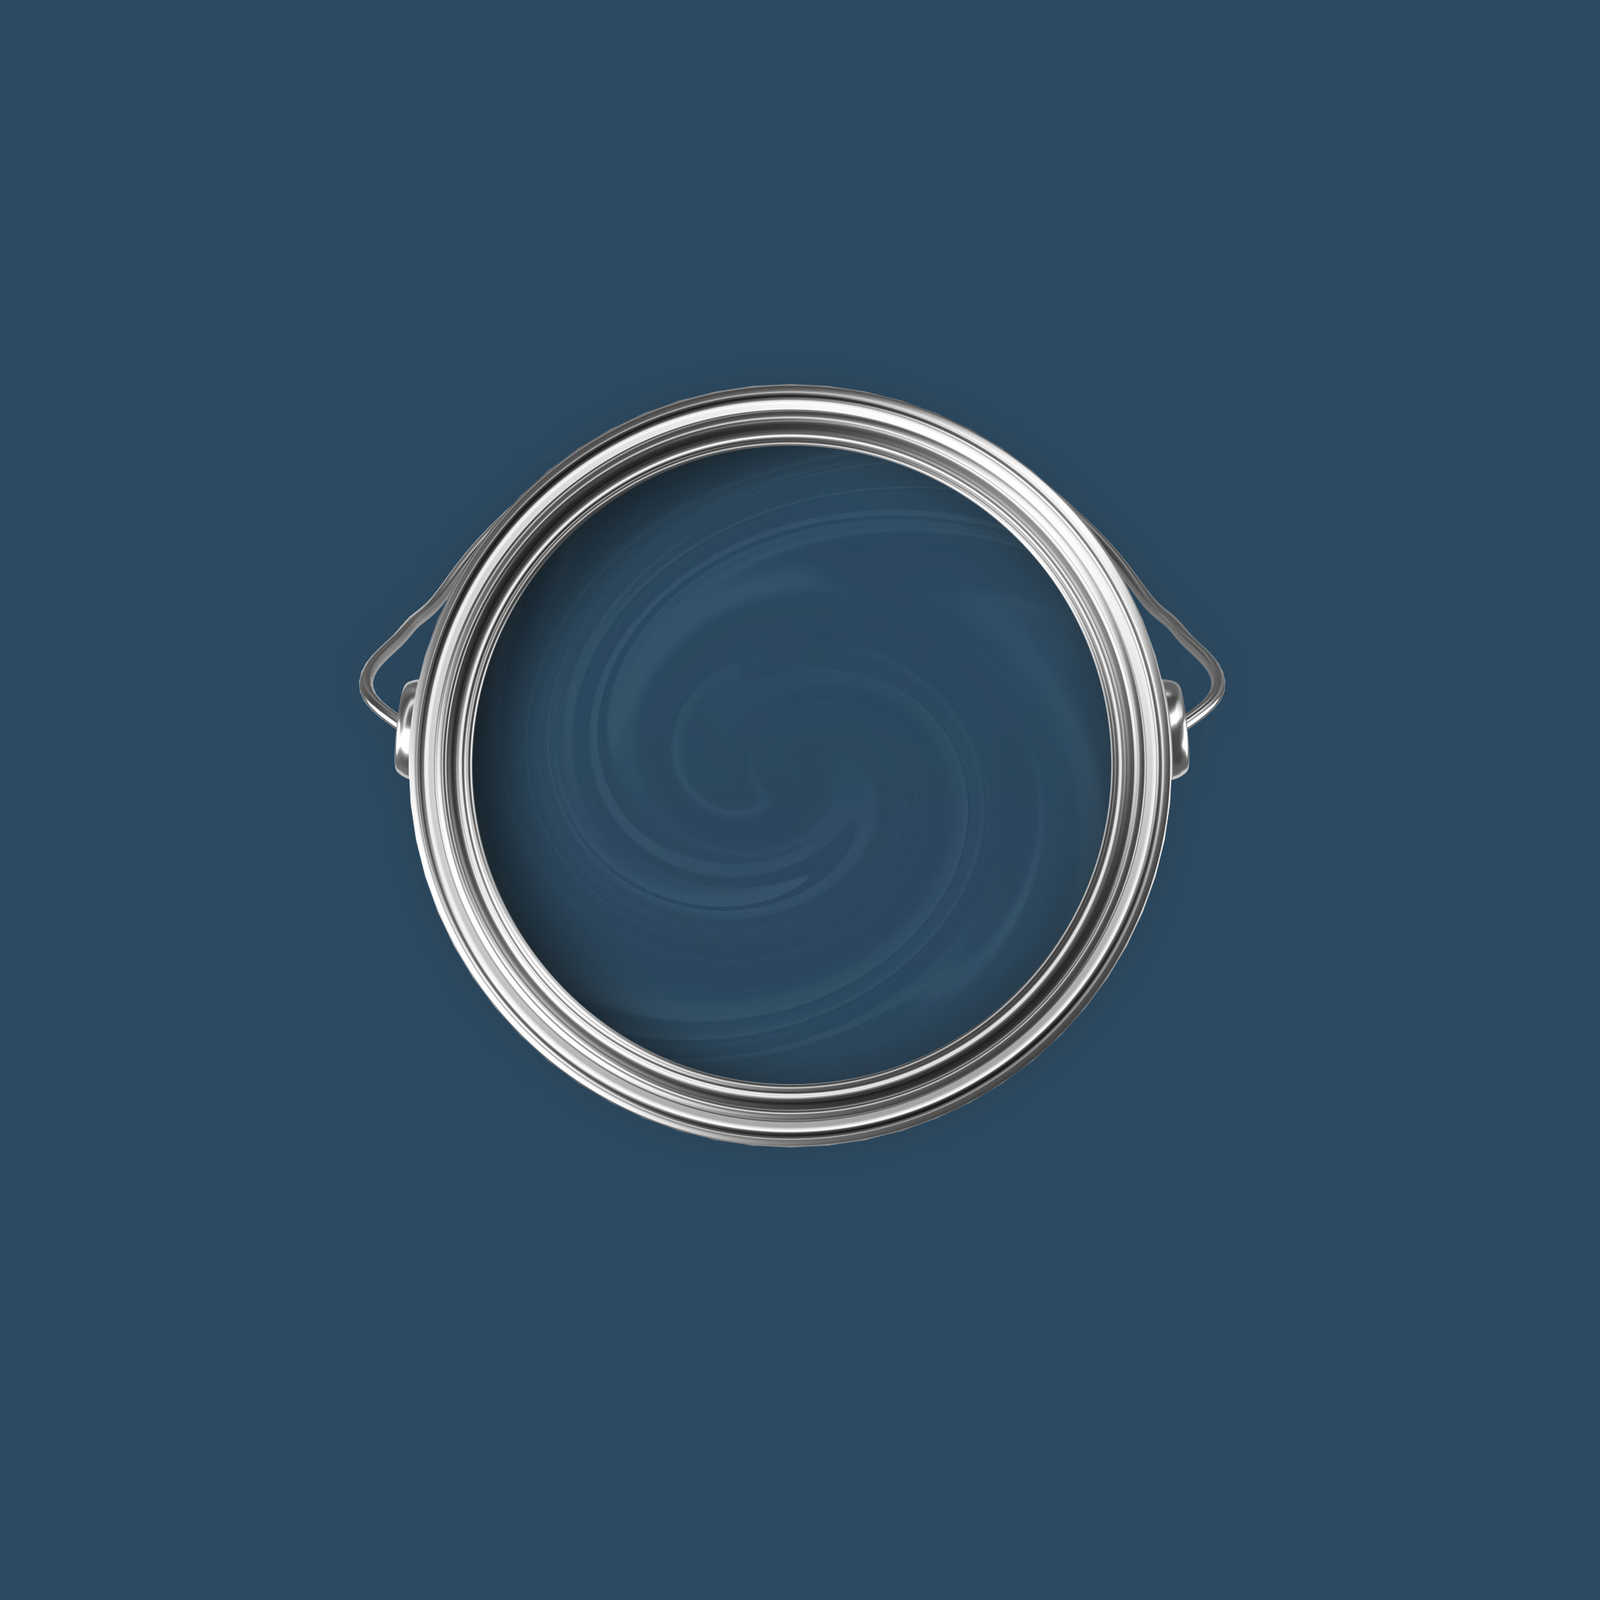             Premium Muurverf Edel Donkerblauw »Blissful Blue« NW308 – 2,5 Liter
        